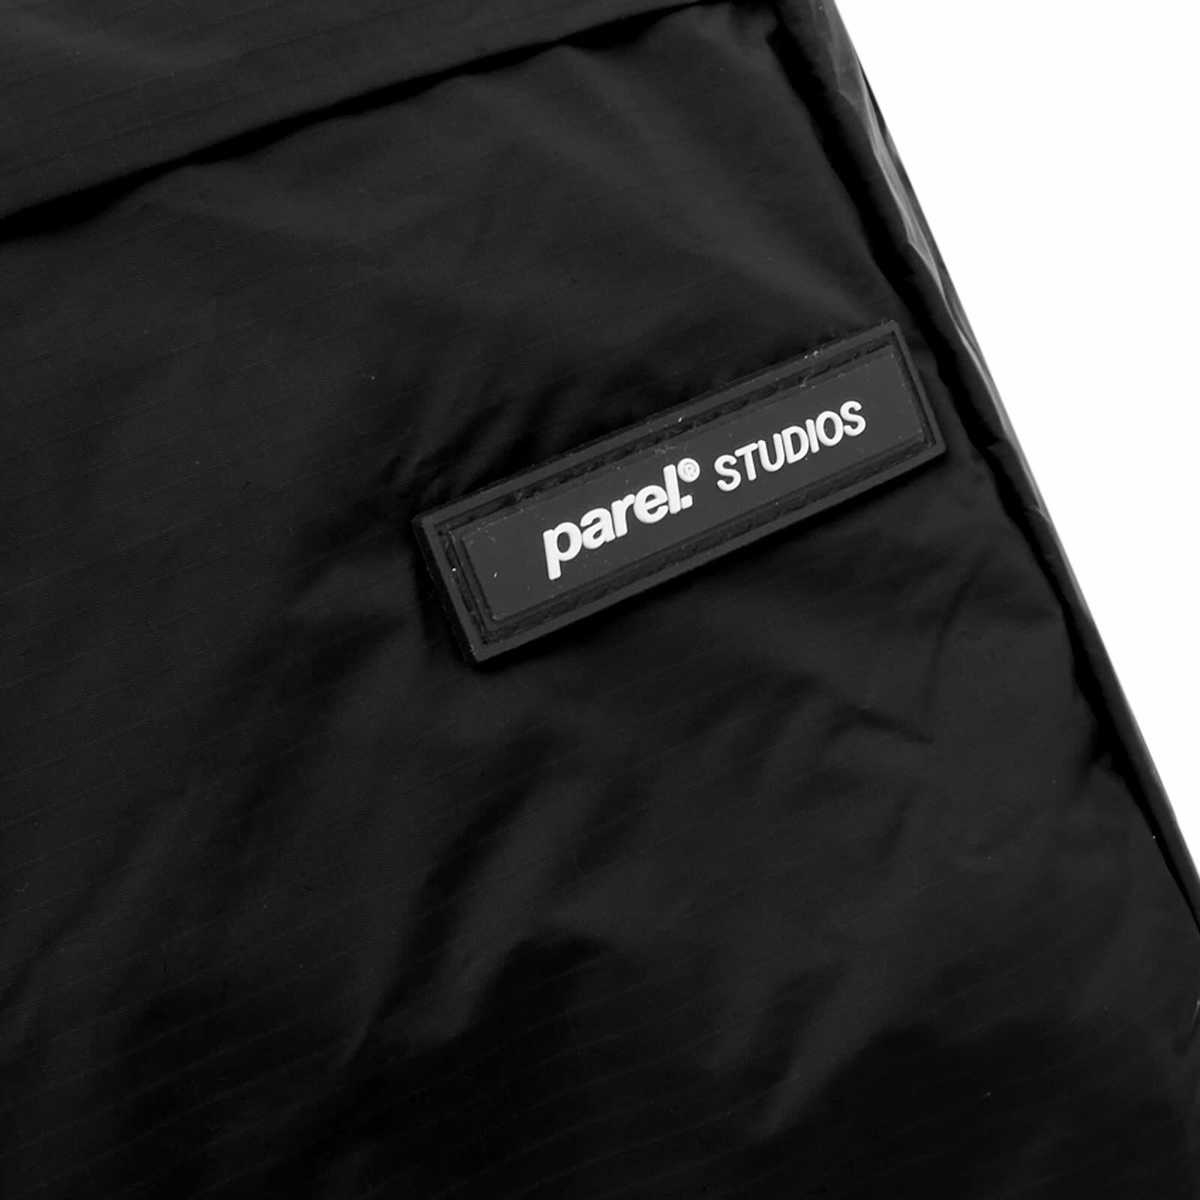 Parel Studios Men's Mini Lokka Bag in Black/Silver Parel Studios